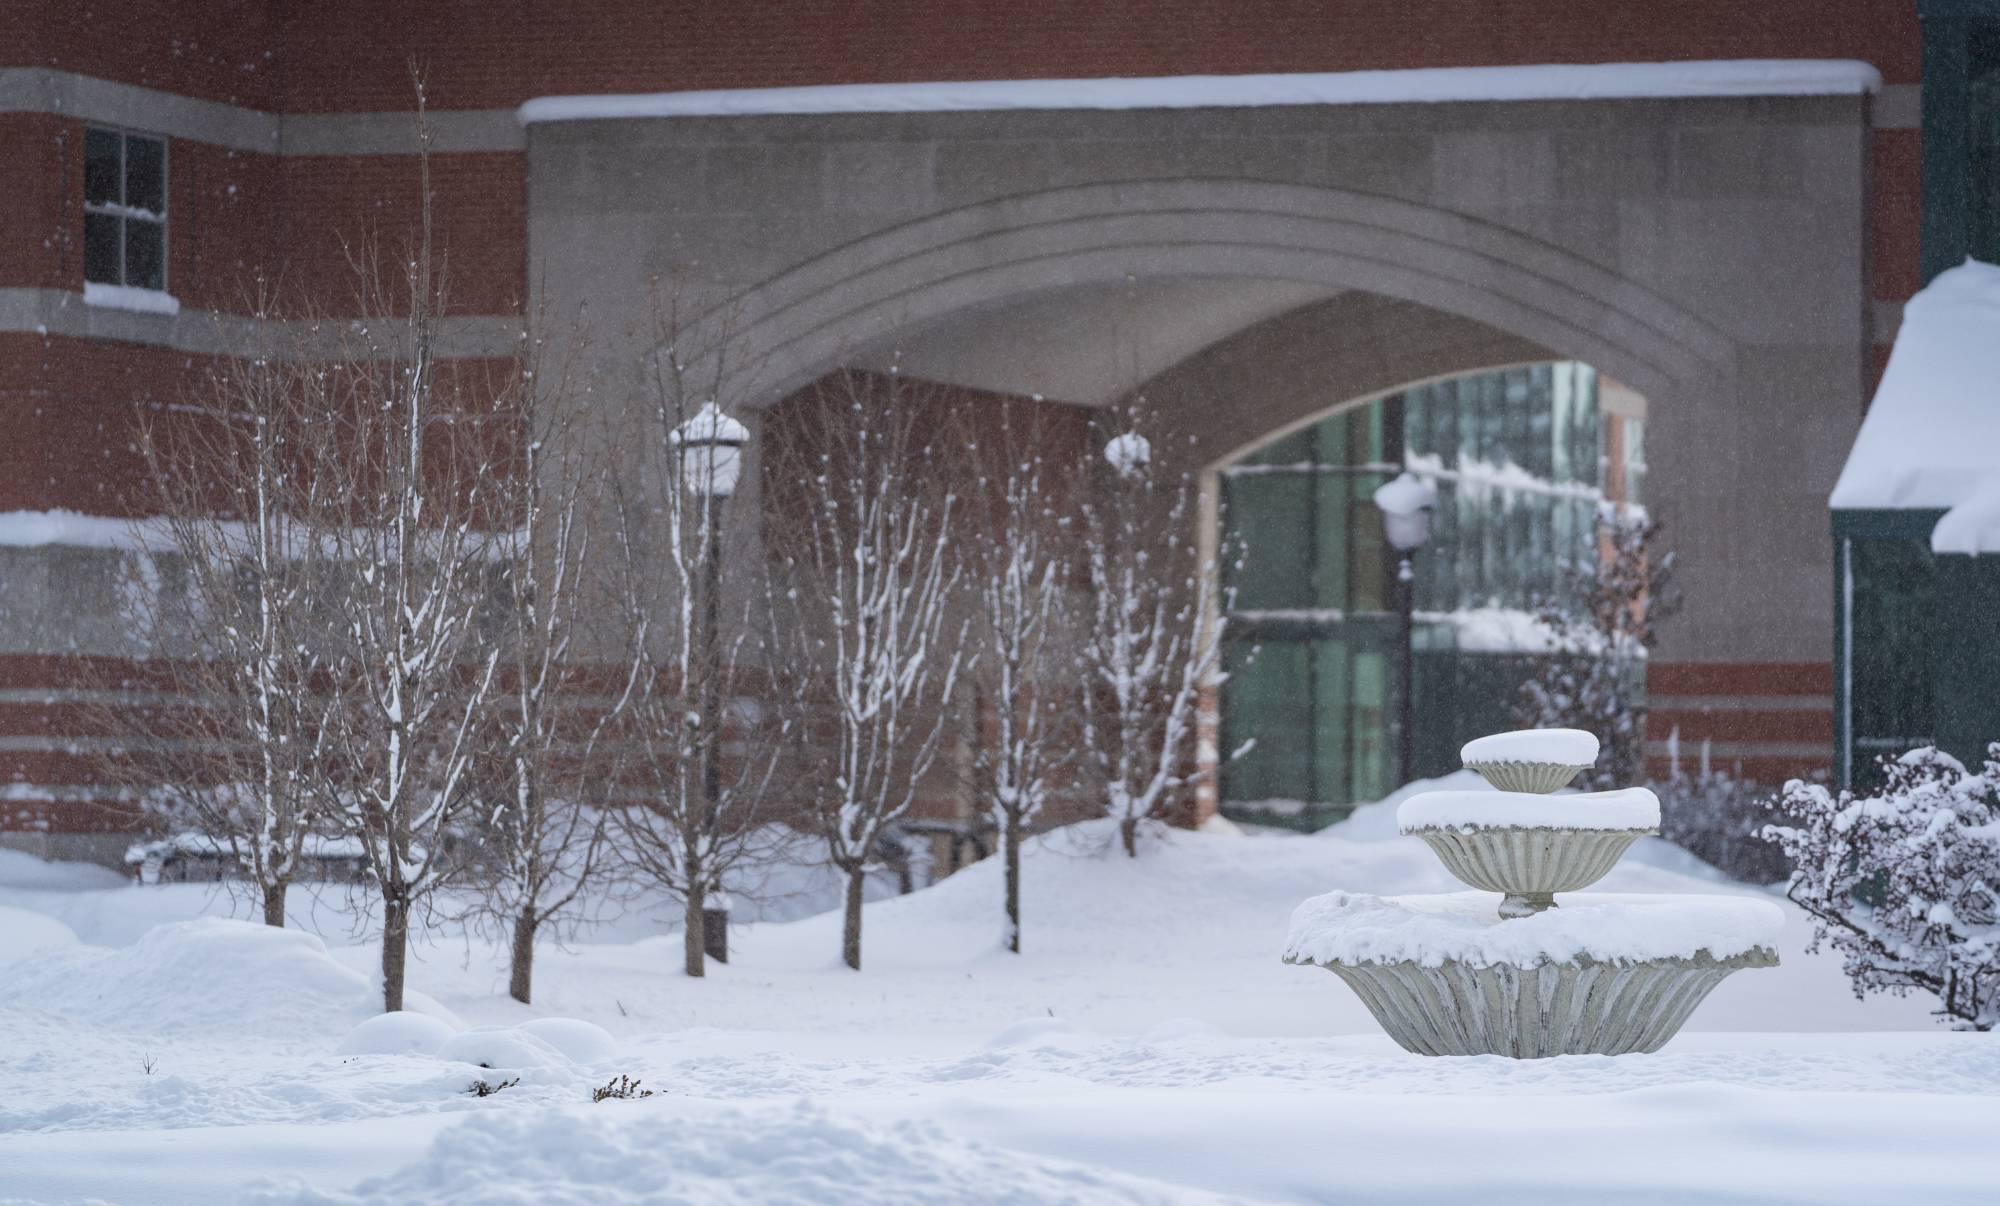 GVSU's Allendale Campus with snow on the ground